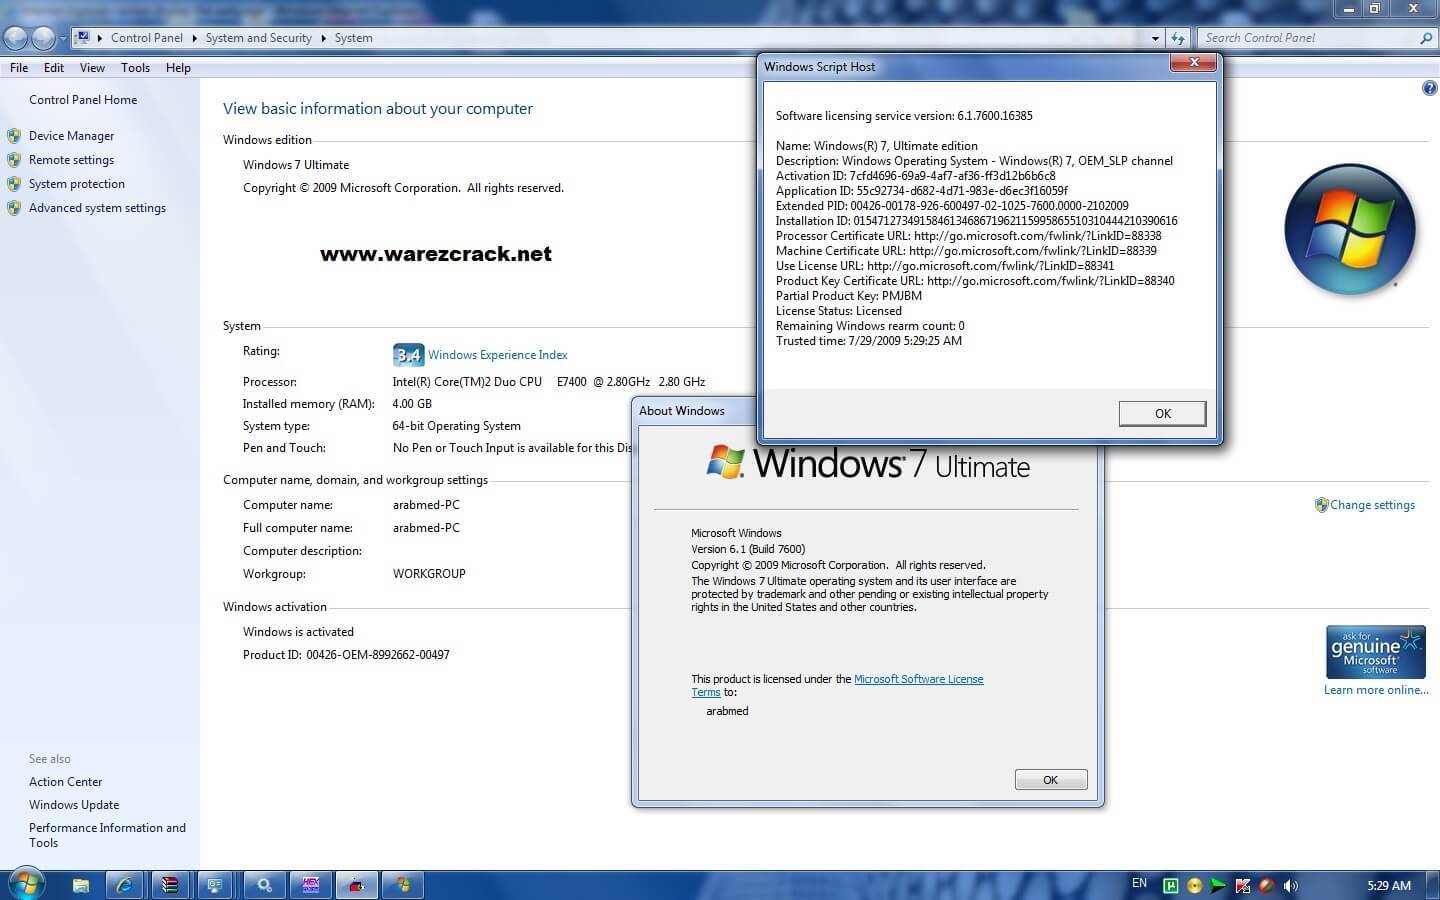 Dell Windows 7 Professional Product Key Generator